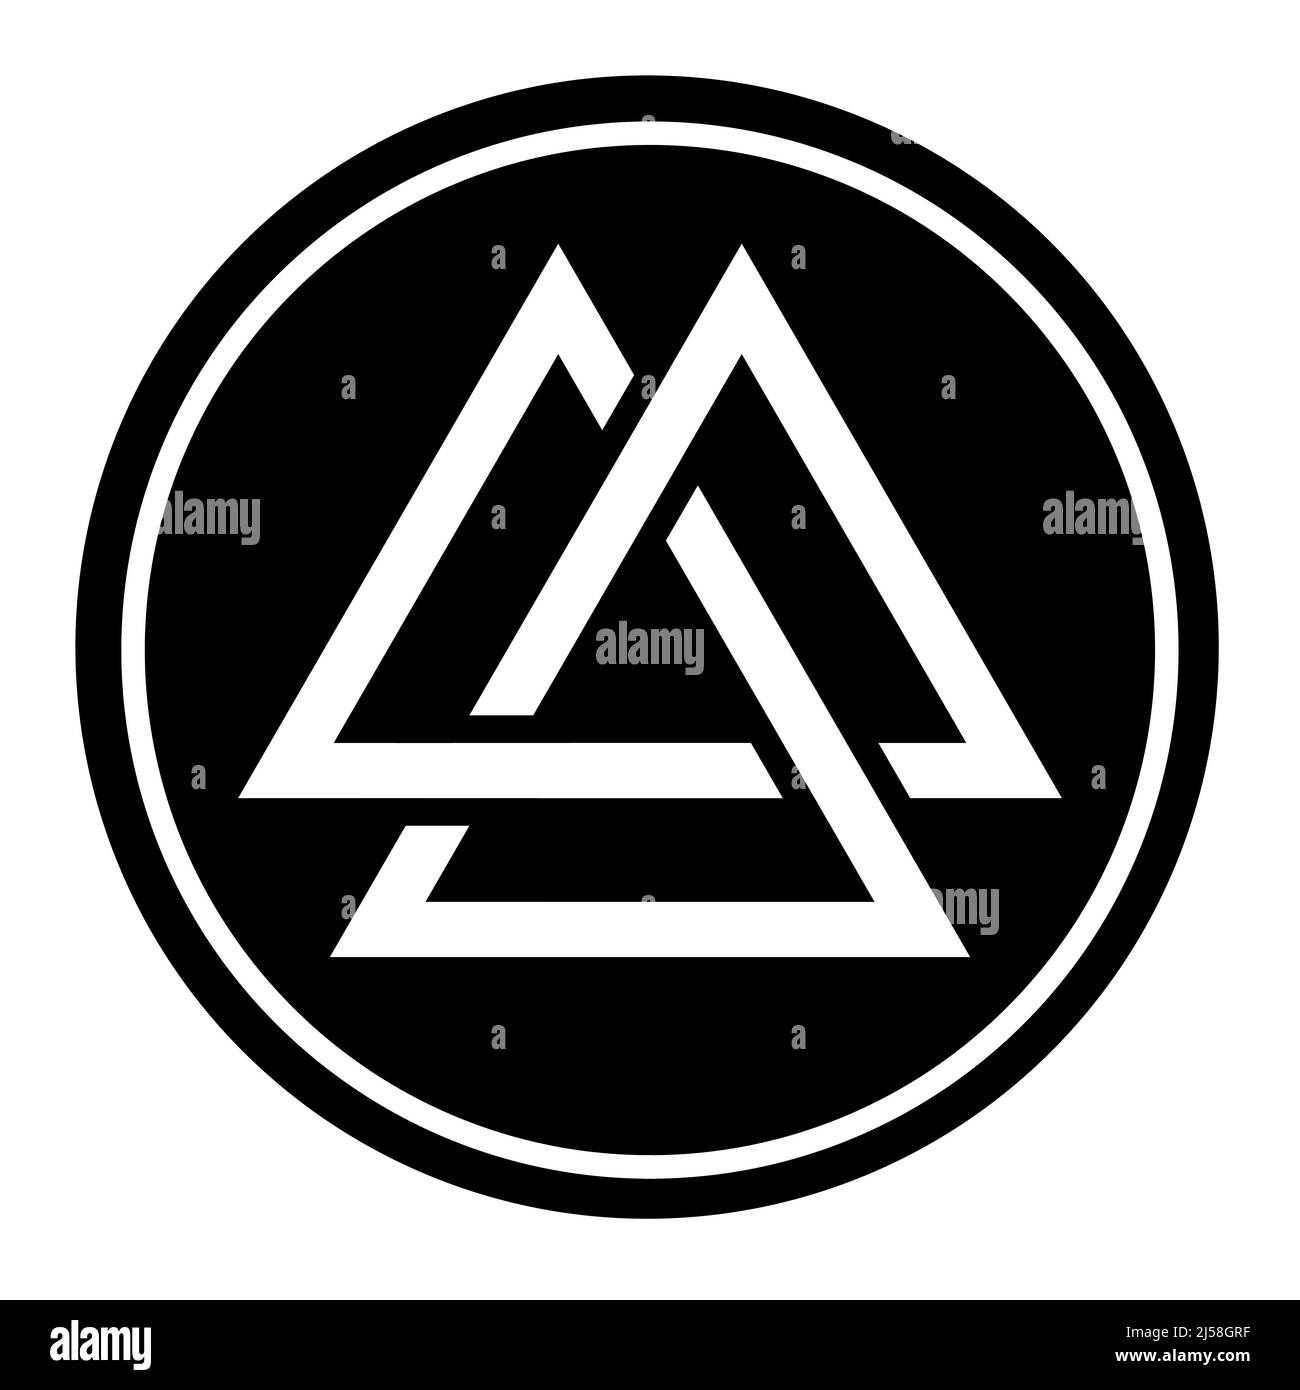 Valknut symbol icon in a black circle Stock Photo